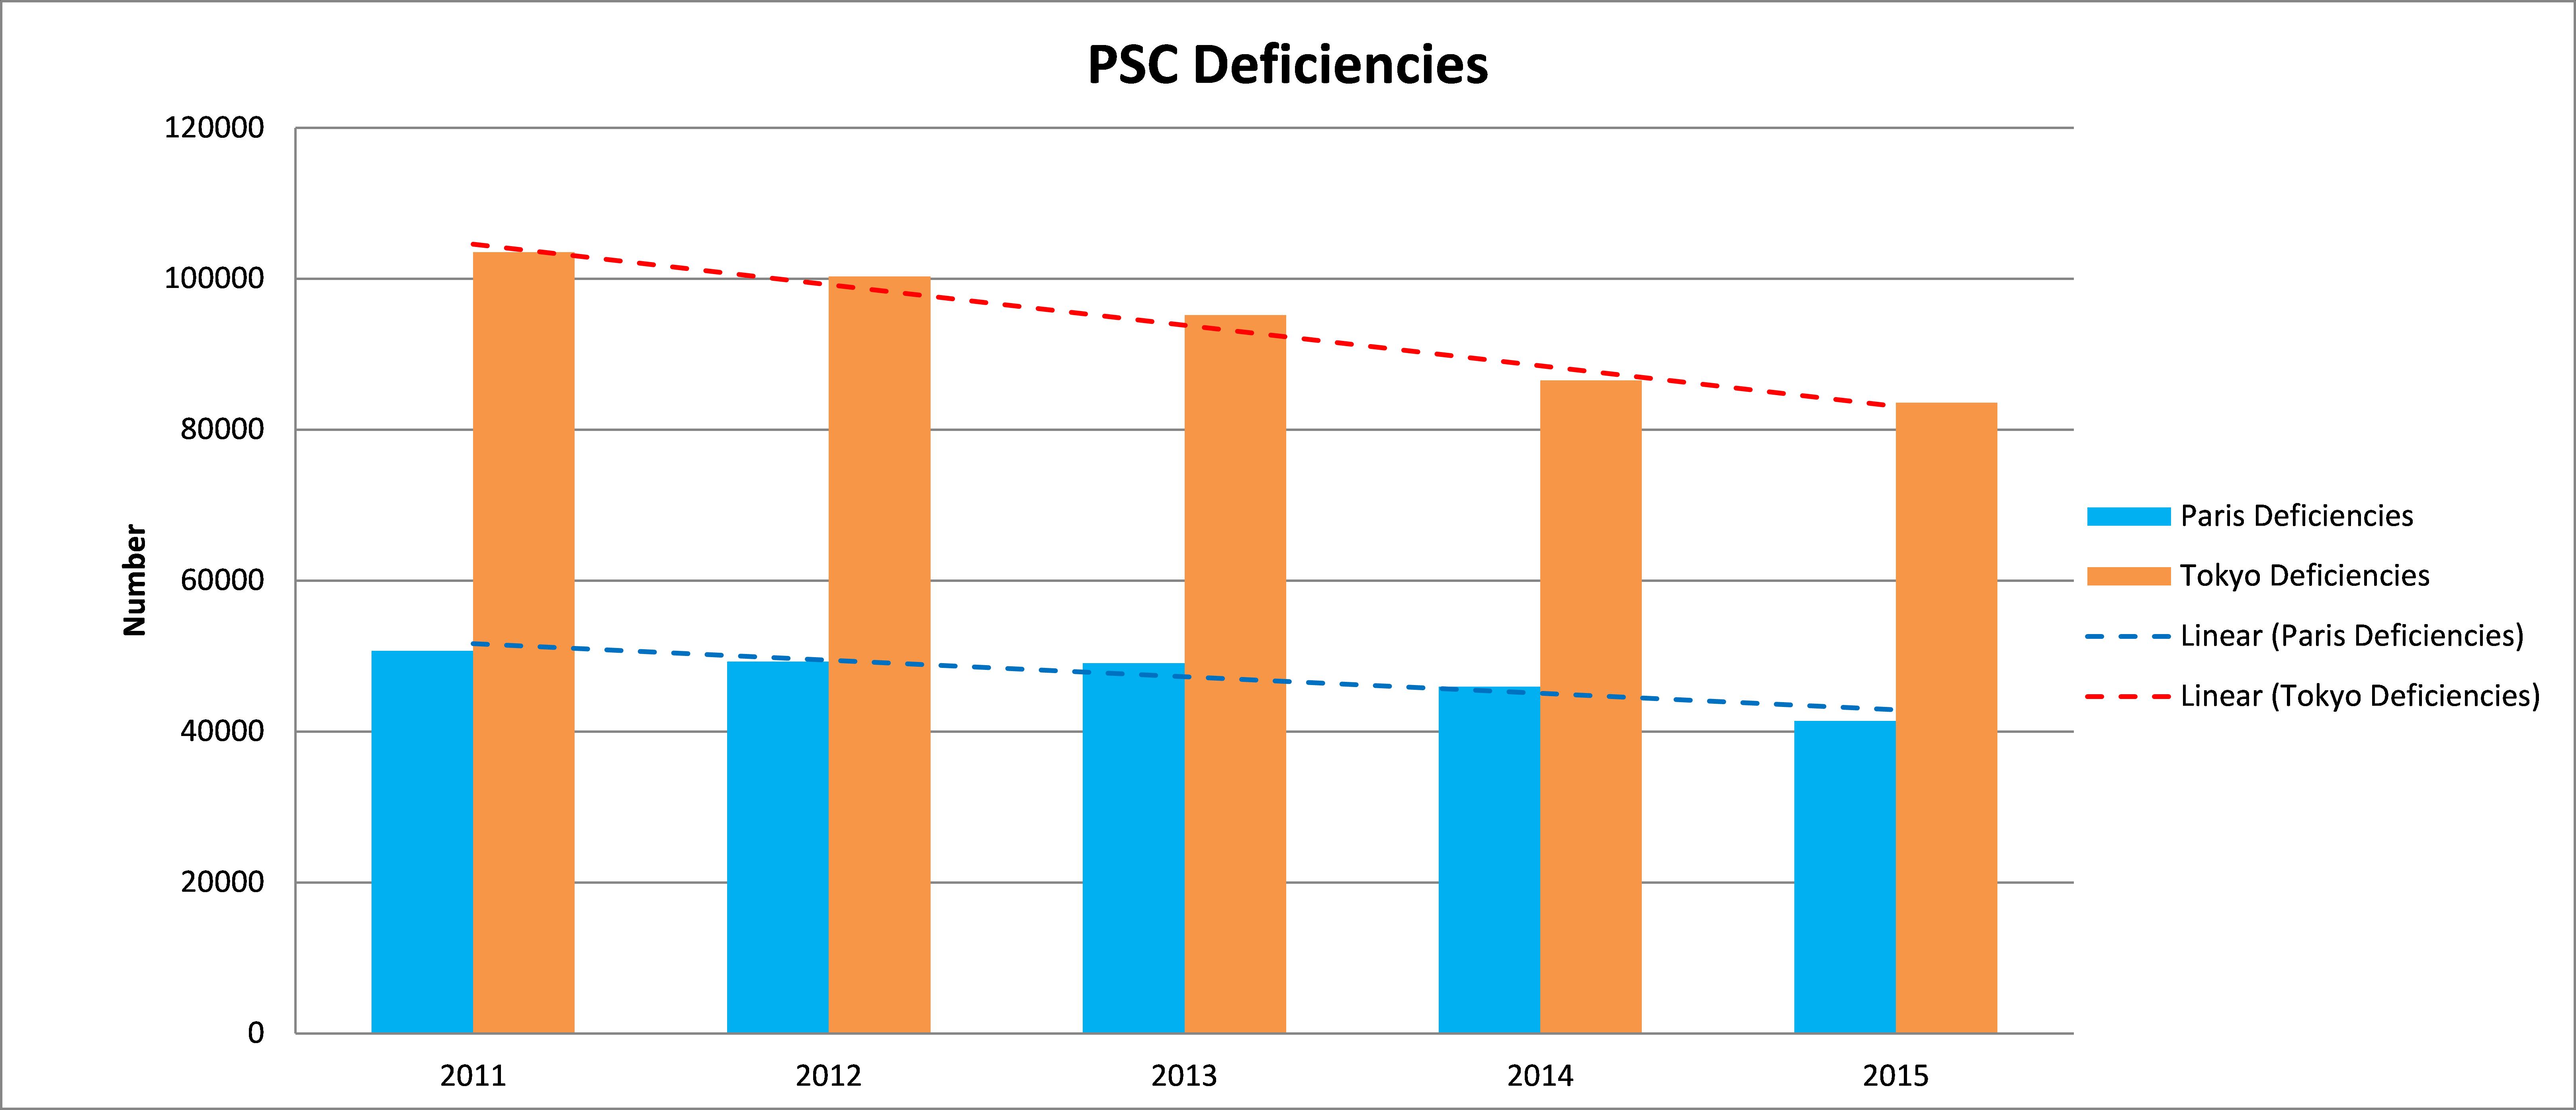 PSC Deficiencies